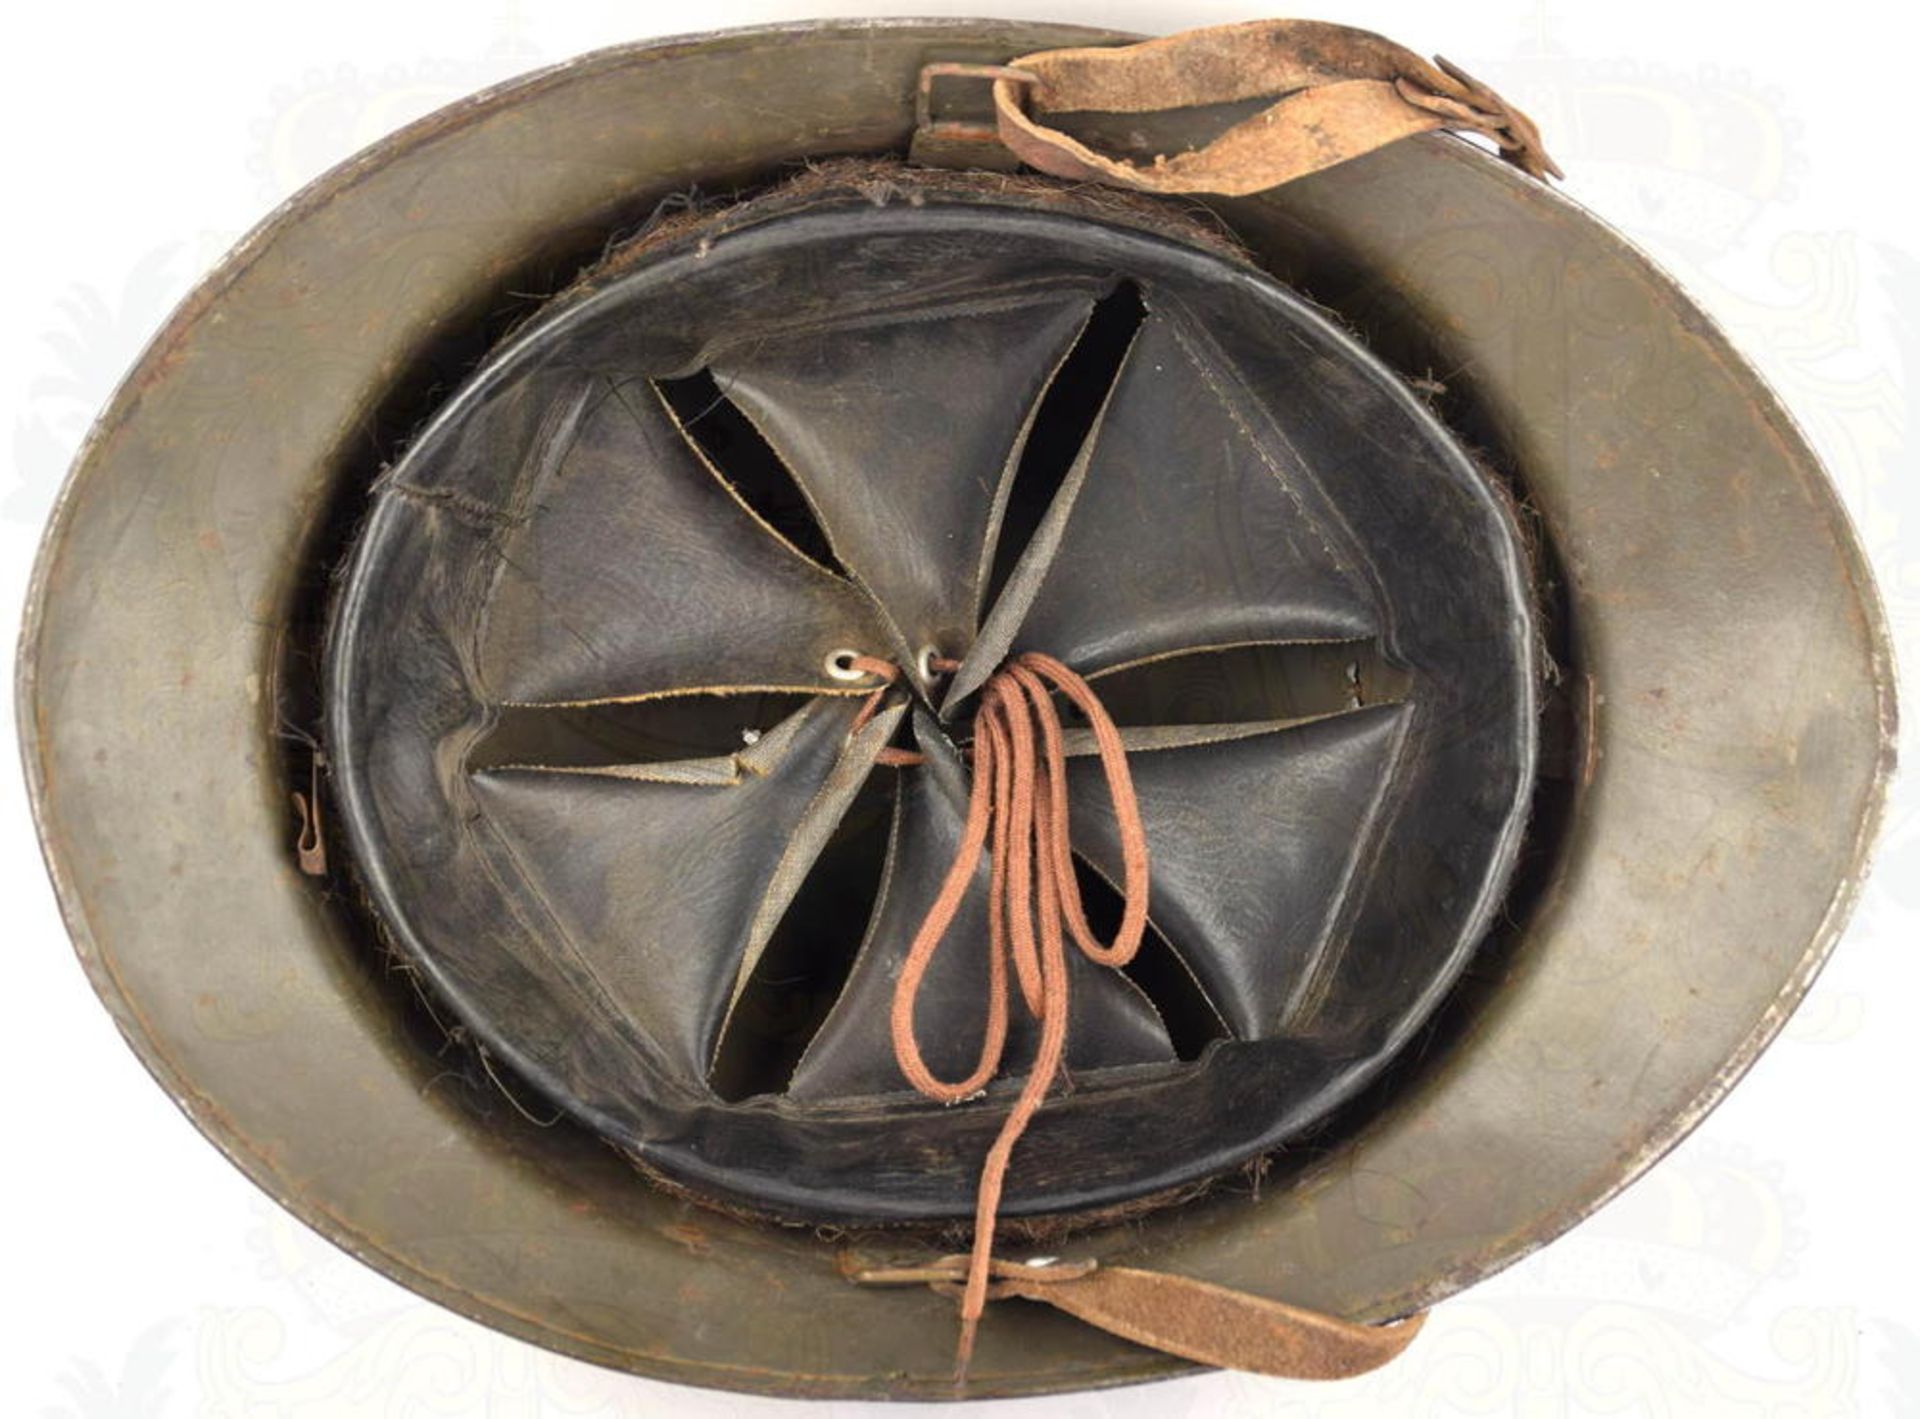 ADRIAN-HELM MODELL 1926 KOLONIAL-INFANTERIE, unmagnetische Glocke olivgrün lackiert, Leichtmetallkam - Bild 4 aus 4